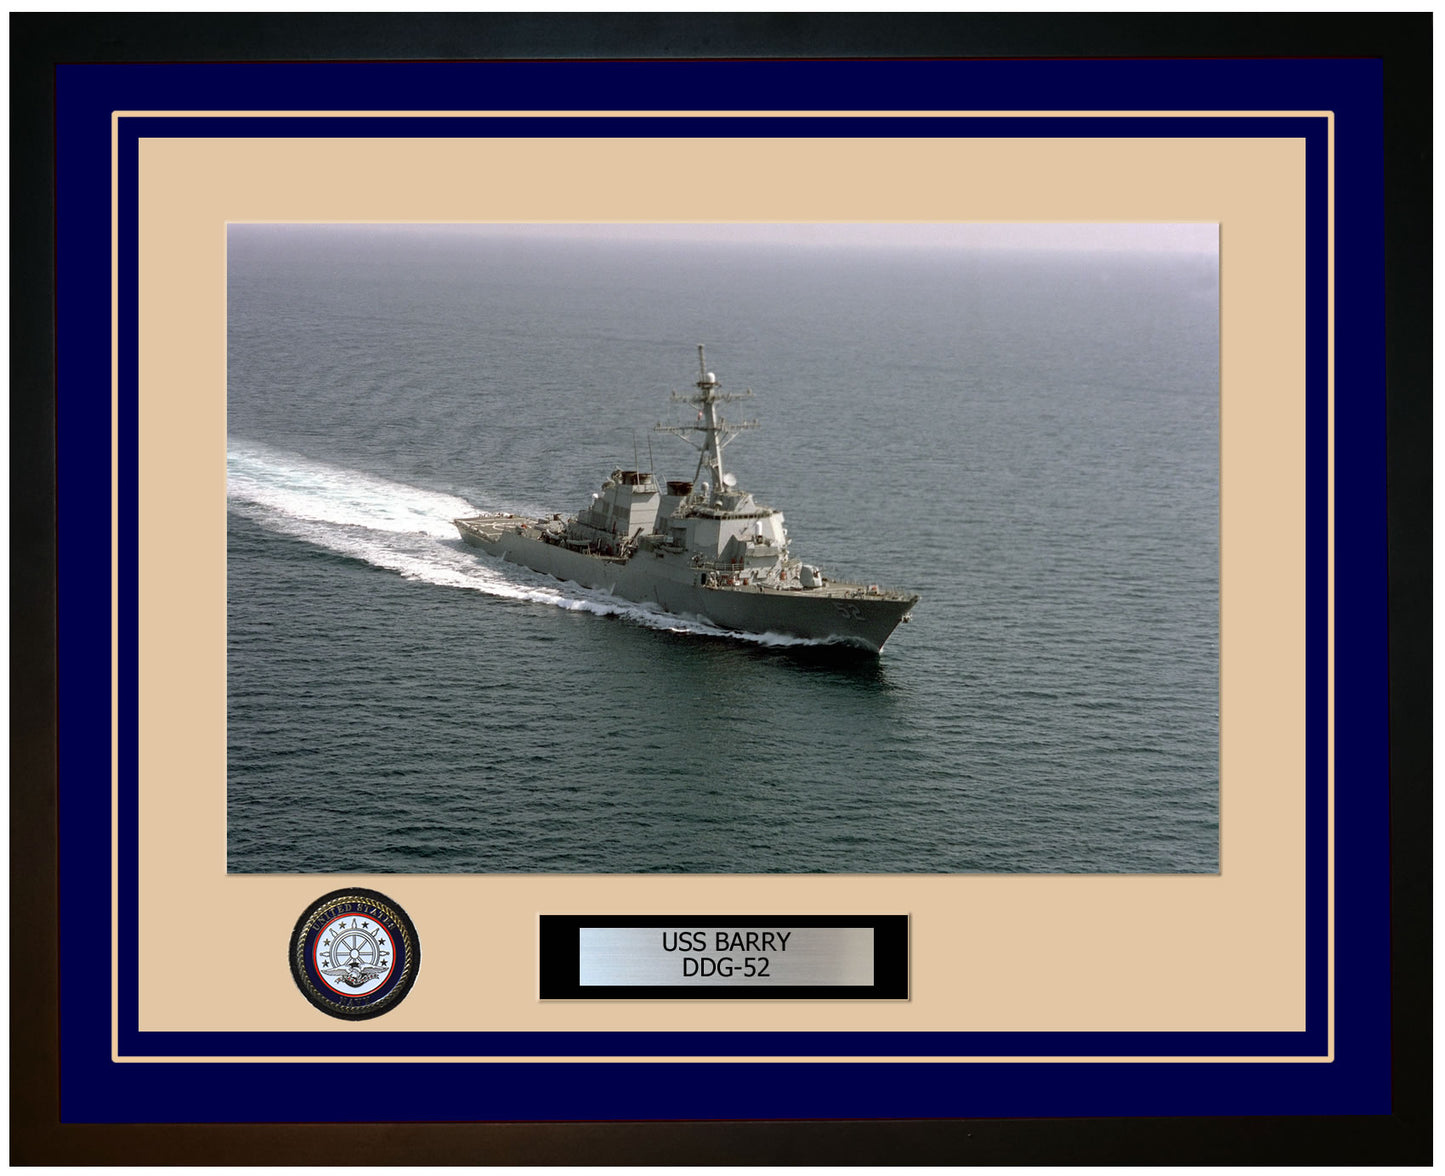 USS BARRY DDG-52 Framed Navy Ship Photo Blue